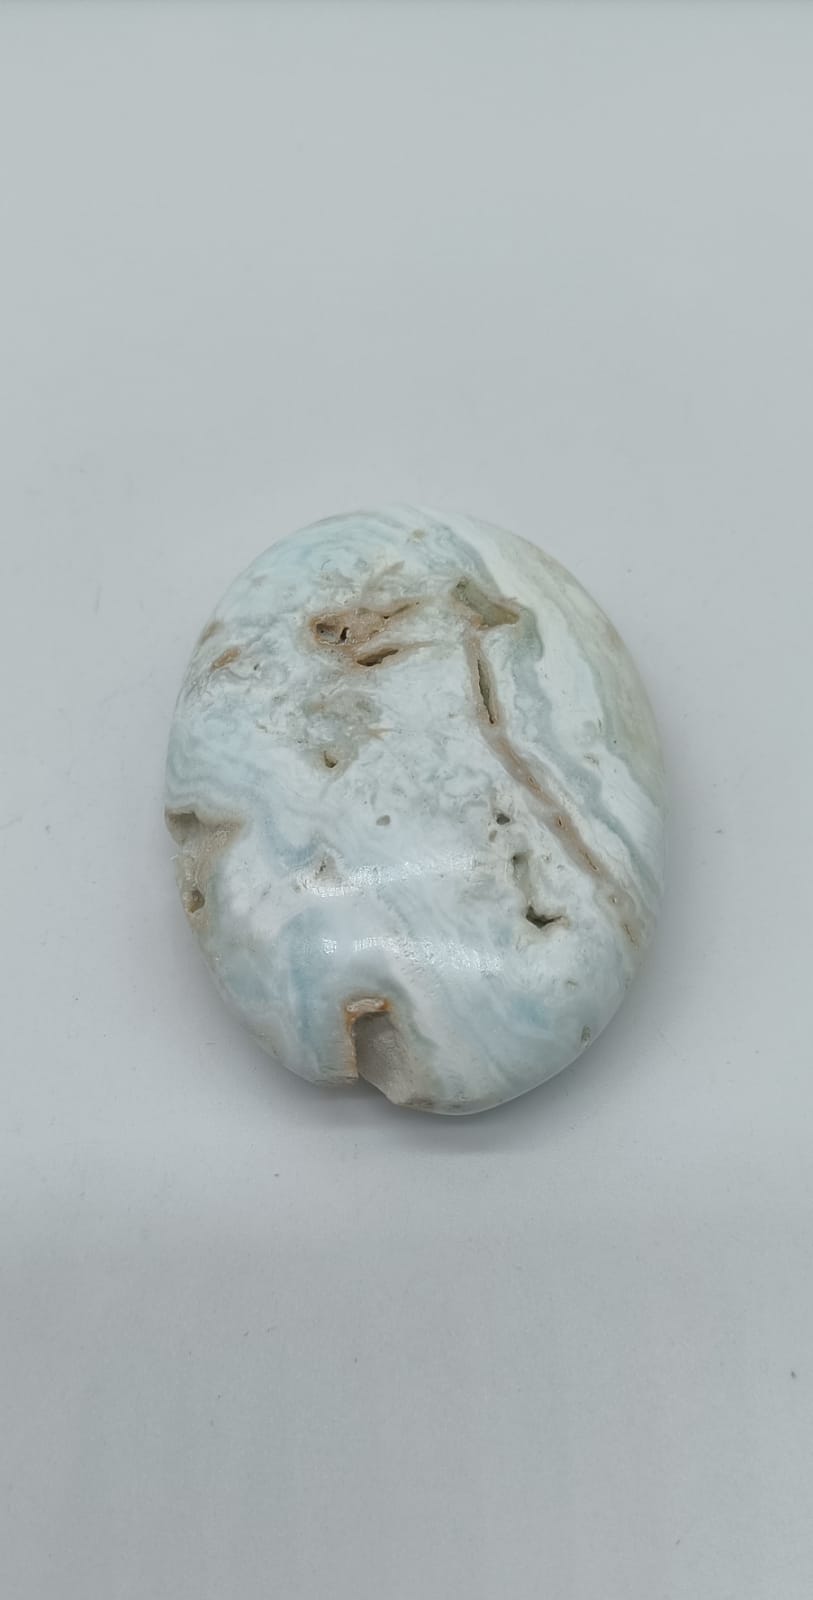 Caribbean Blue Calcite Palm Stone